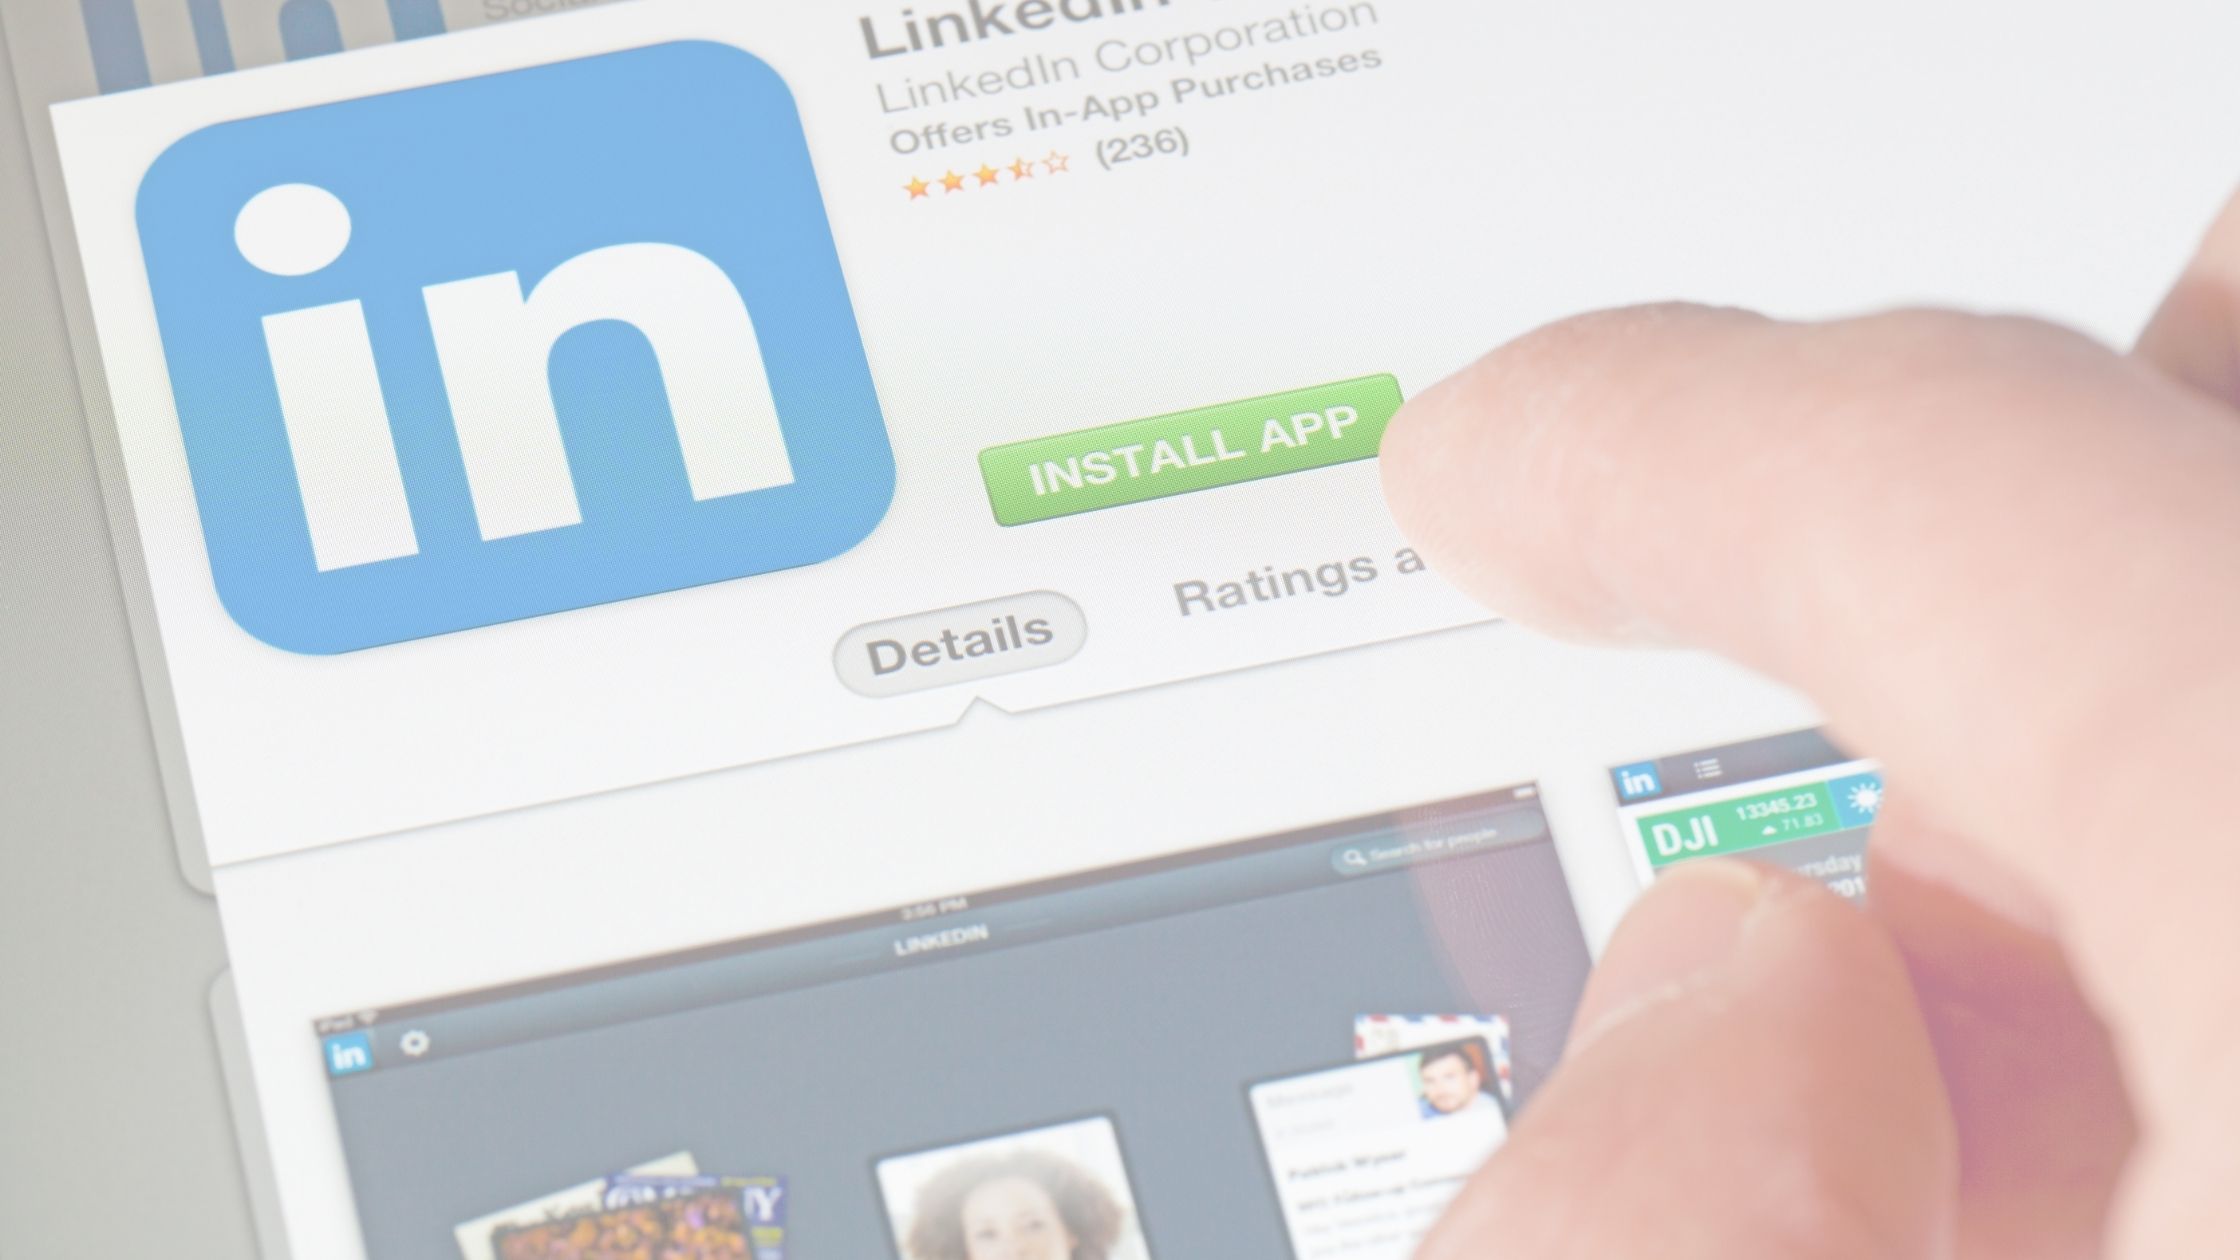 LinkedIn Profile Writing Service Information.  Showing logo 